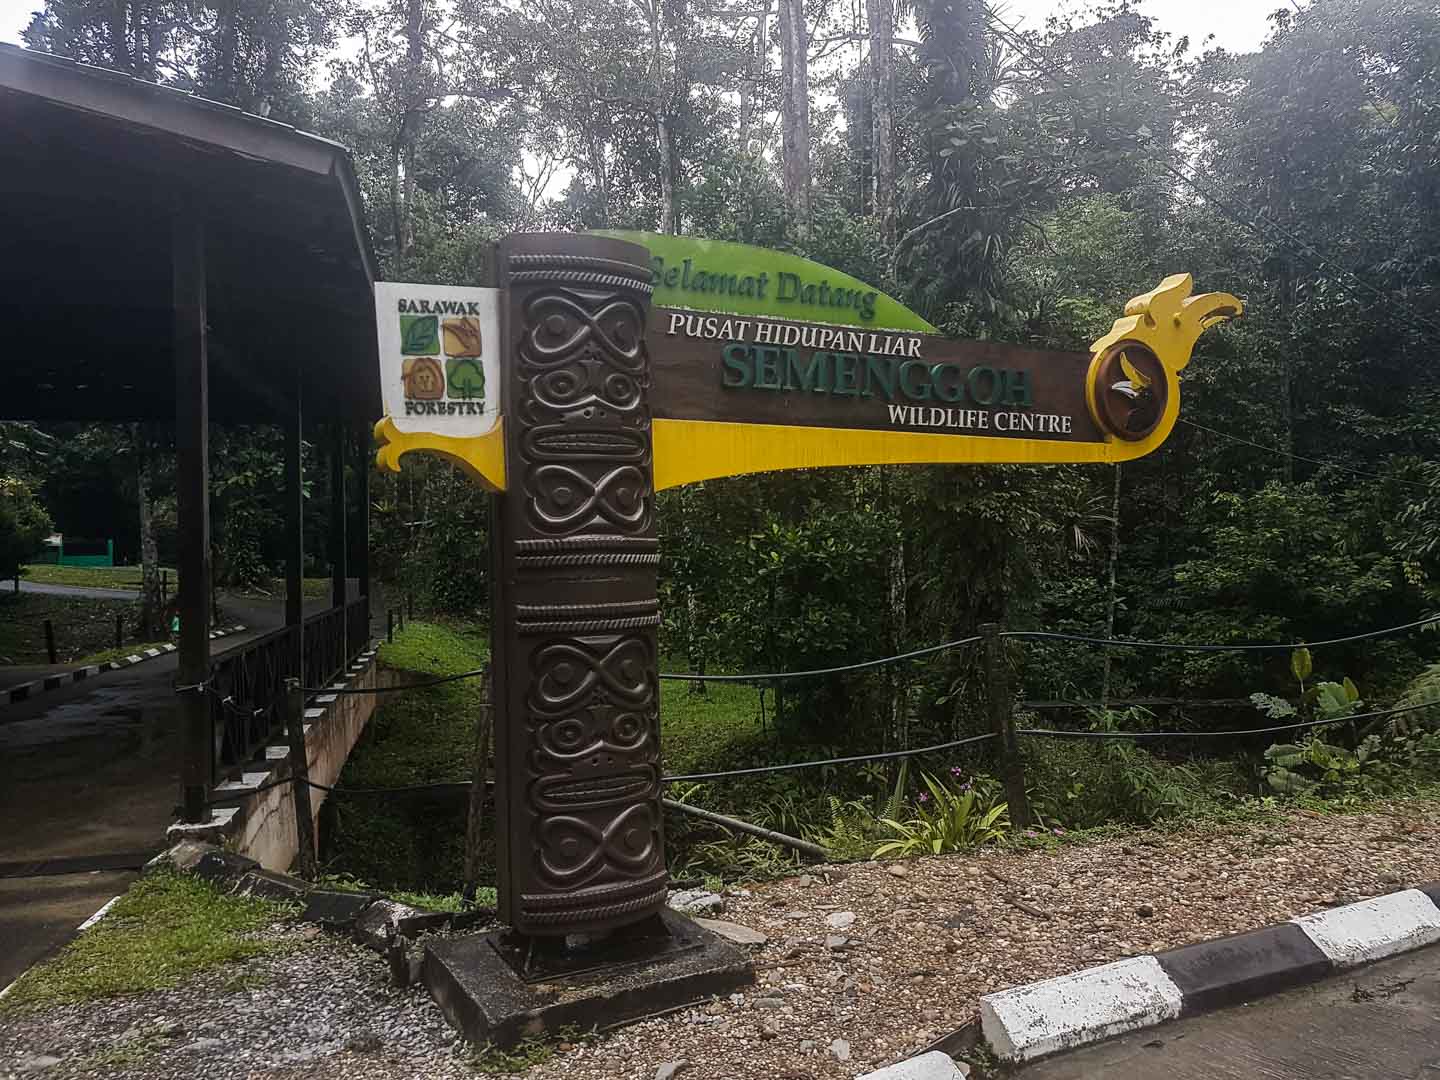 Semenggoh Nature Reserve in Sarawak, Borneo